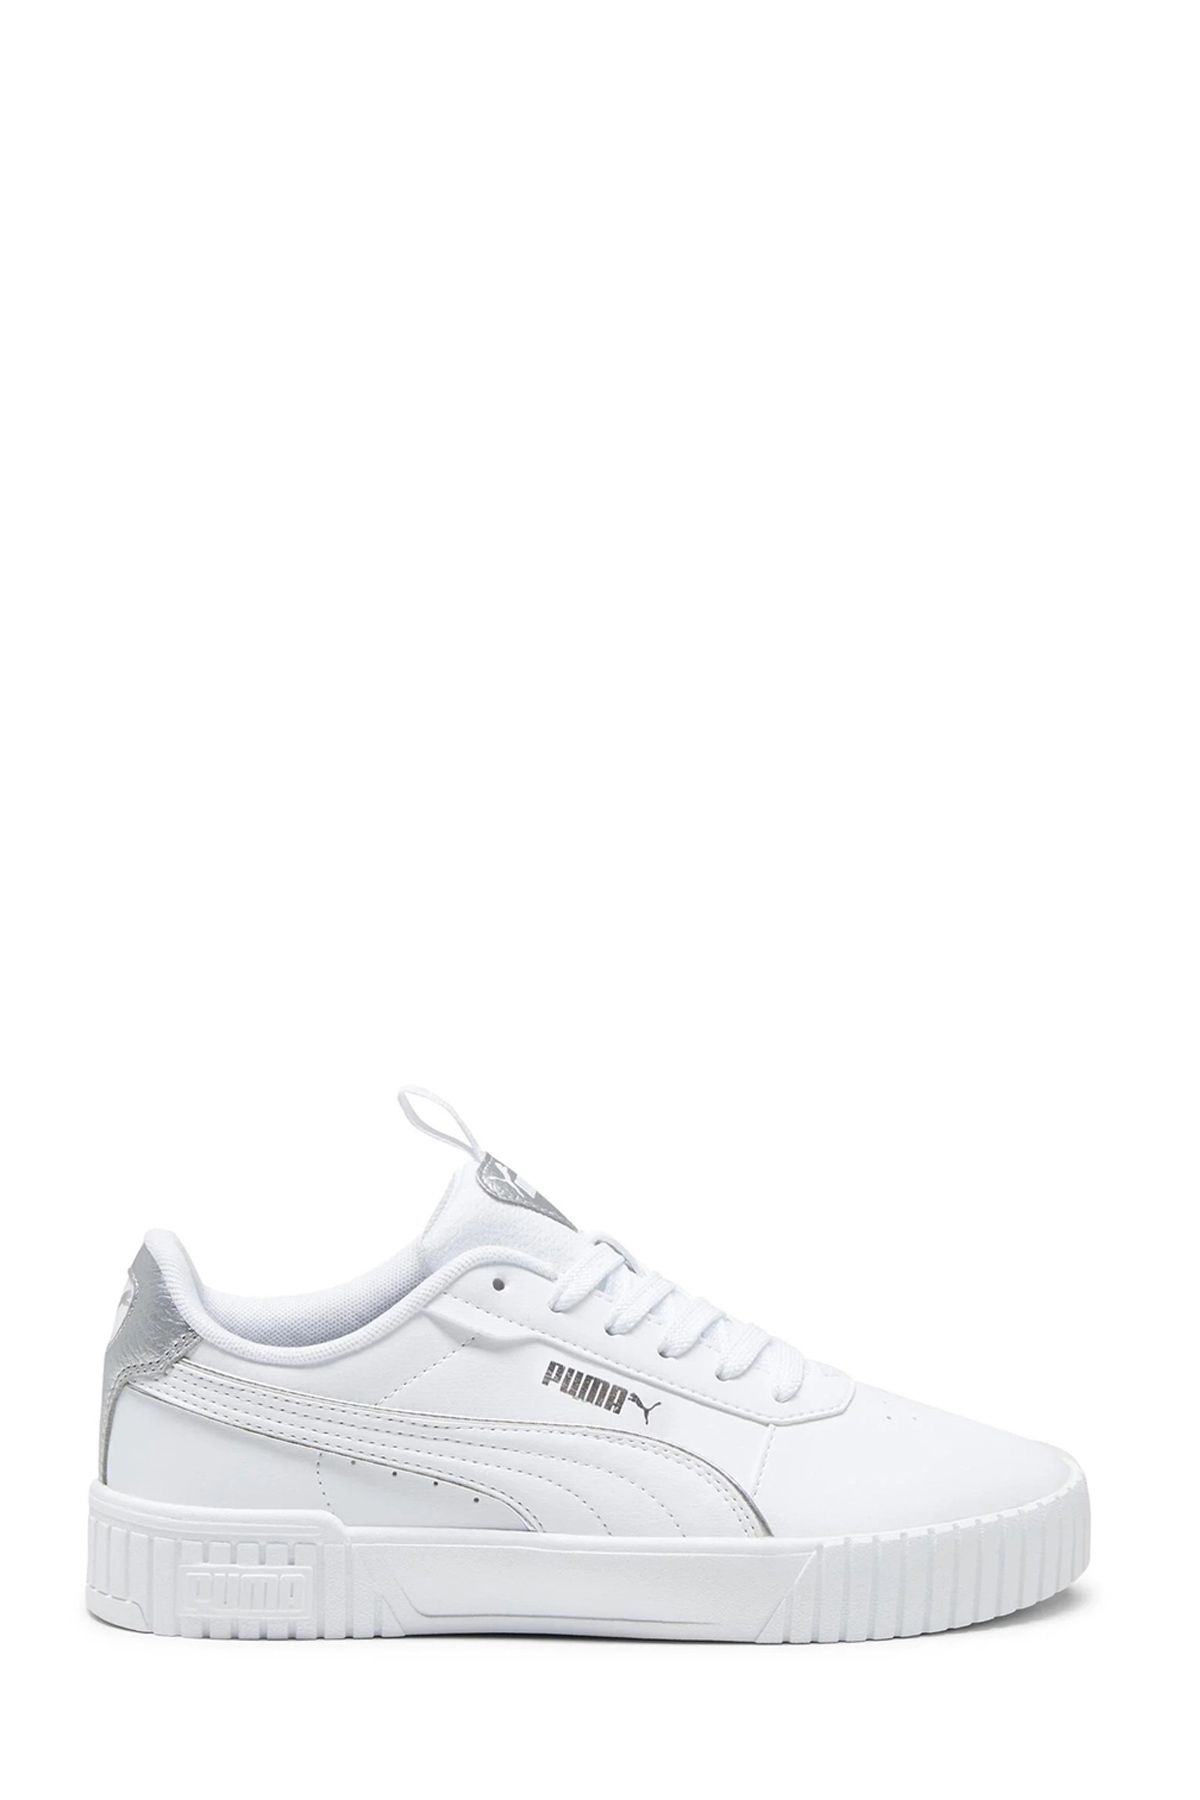 Puma Carina 2.0 Pop Up Metalli Beyaz Kadın Sneaker